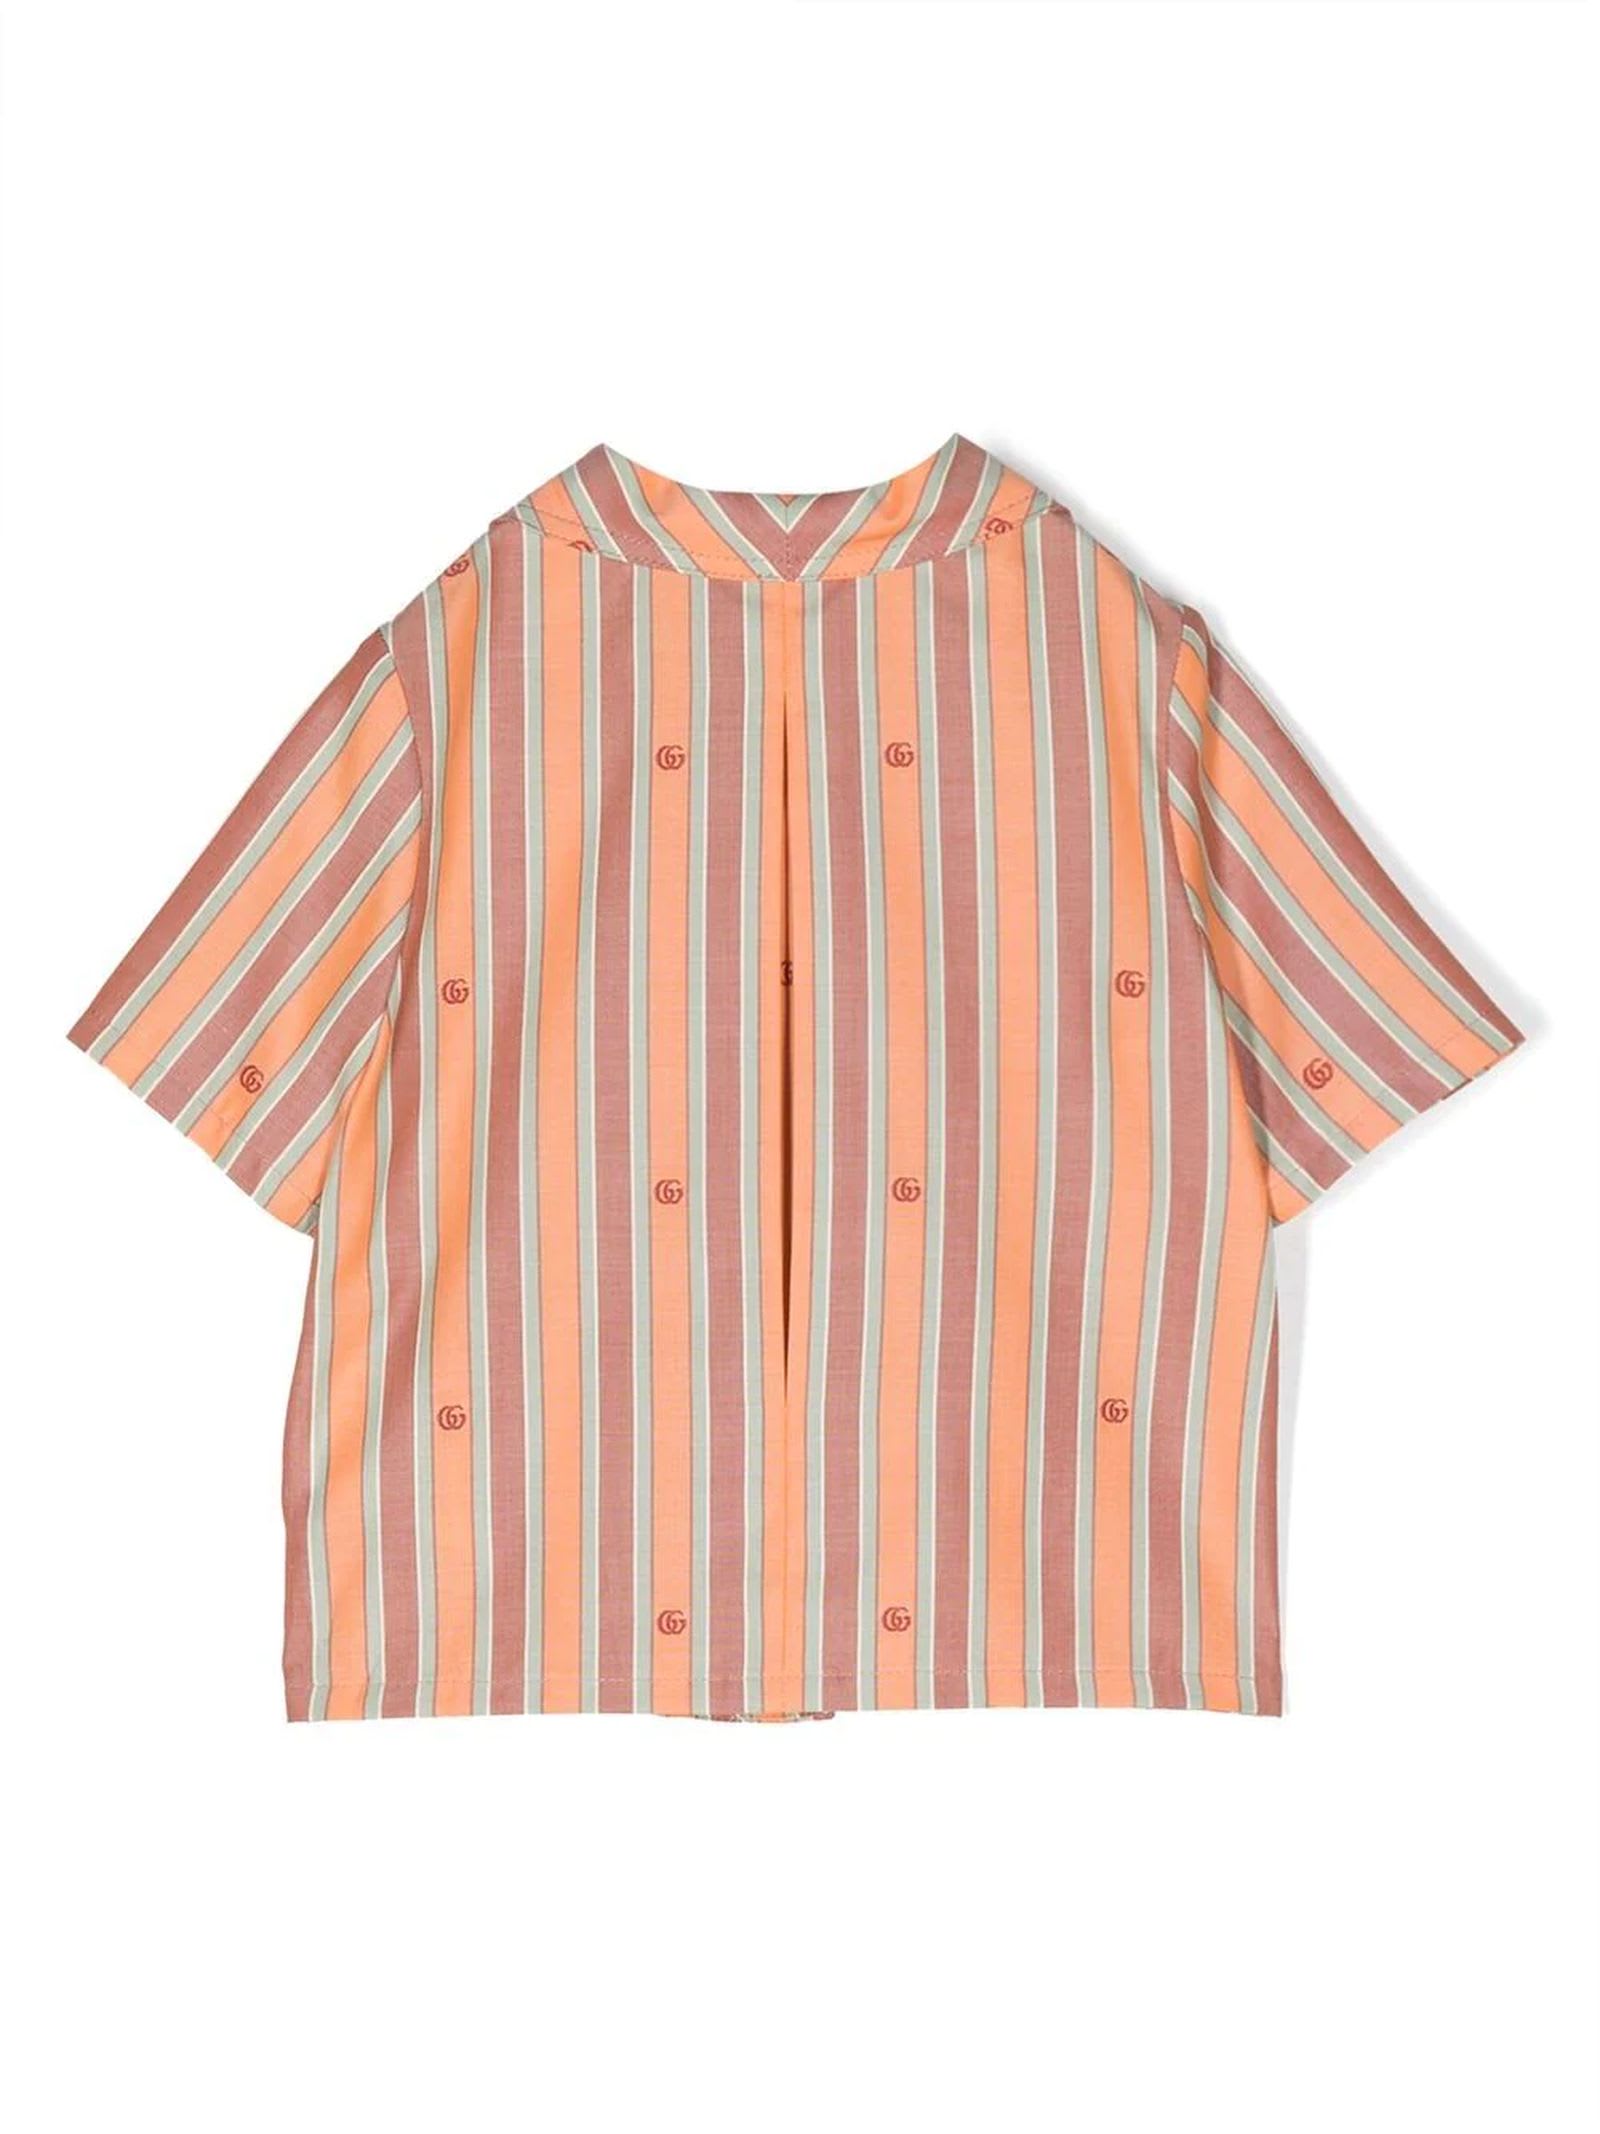 Shop Gucci Kids Shirts Orange